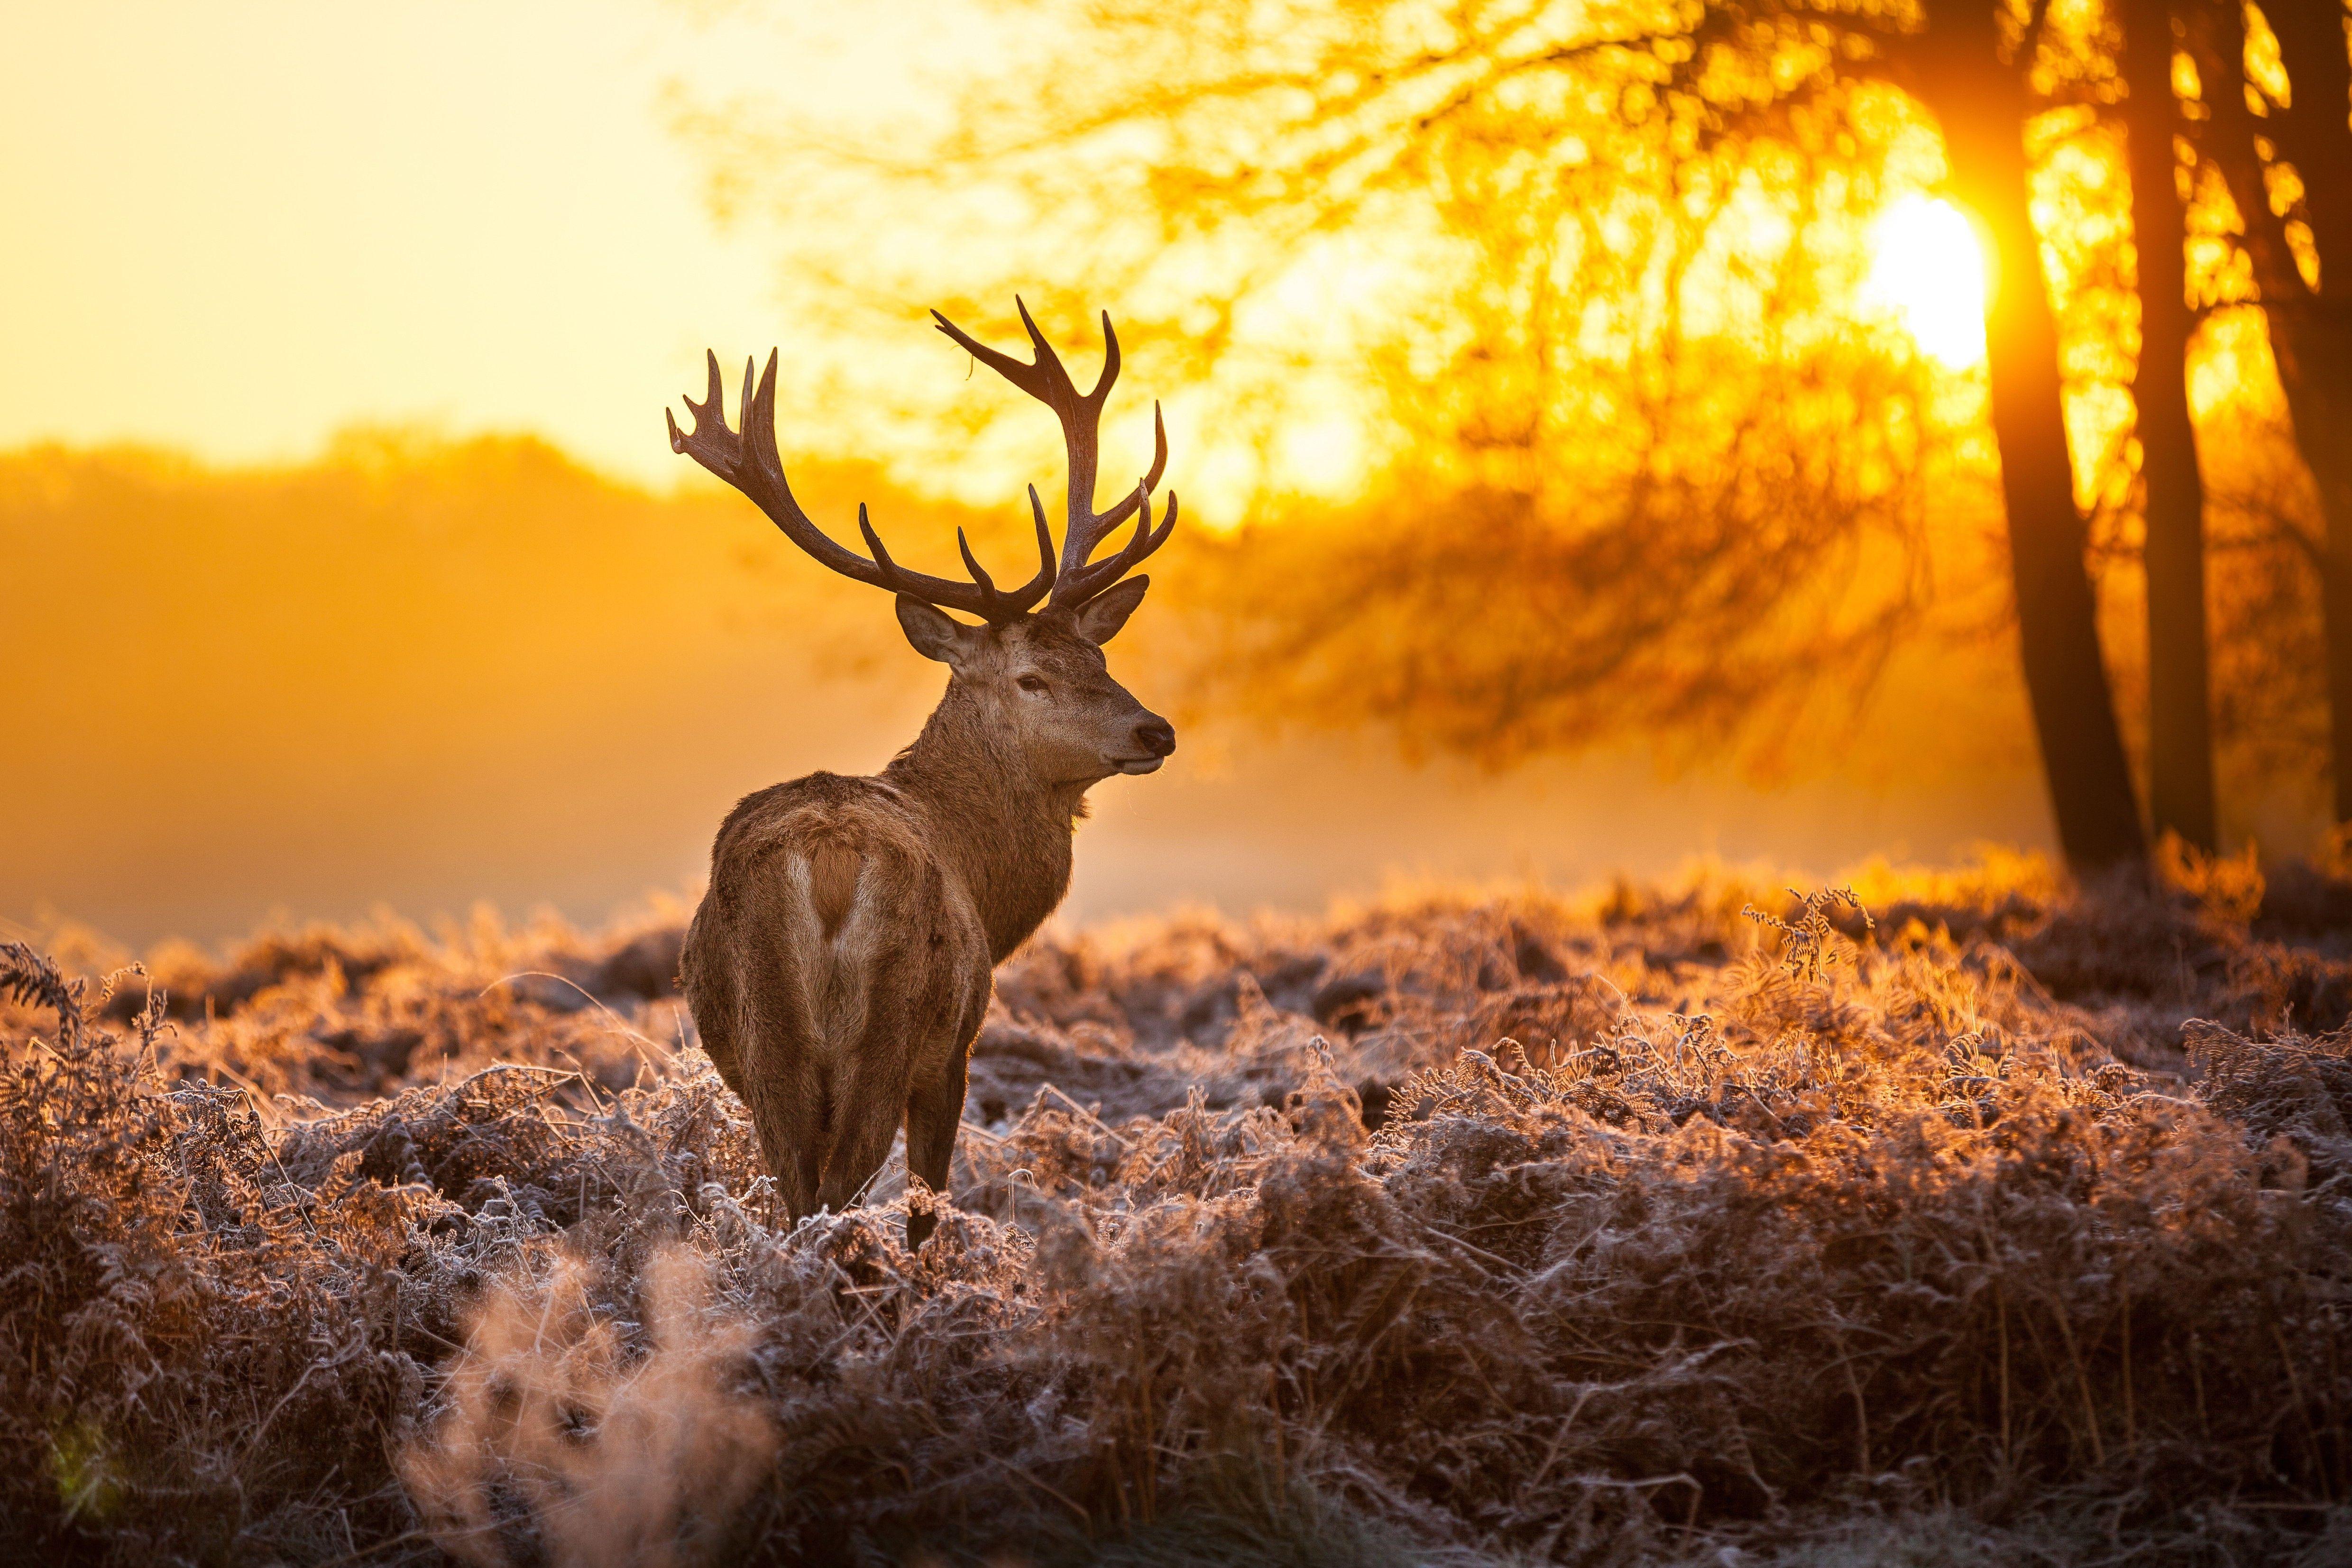 Deer 4k Ultra HD Wallpaper. Background Imagex3307